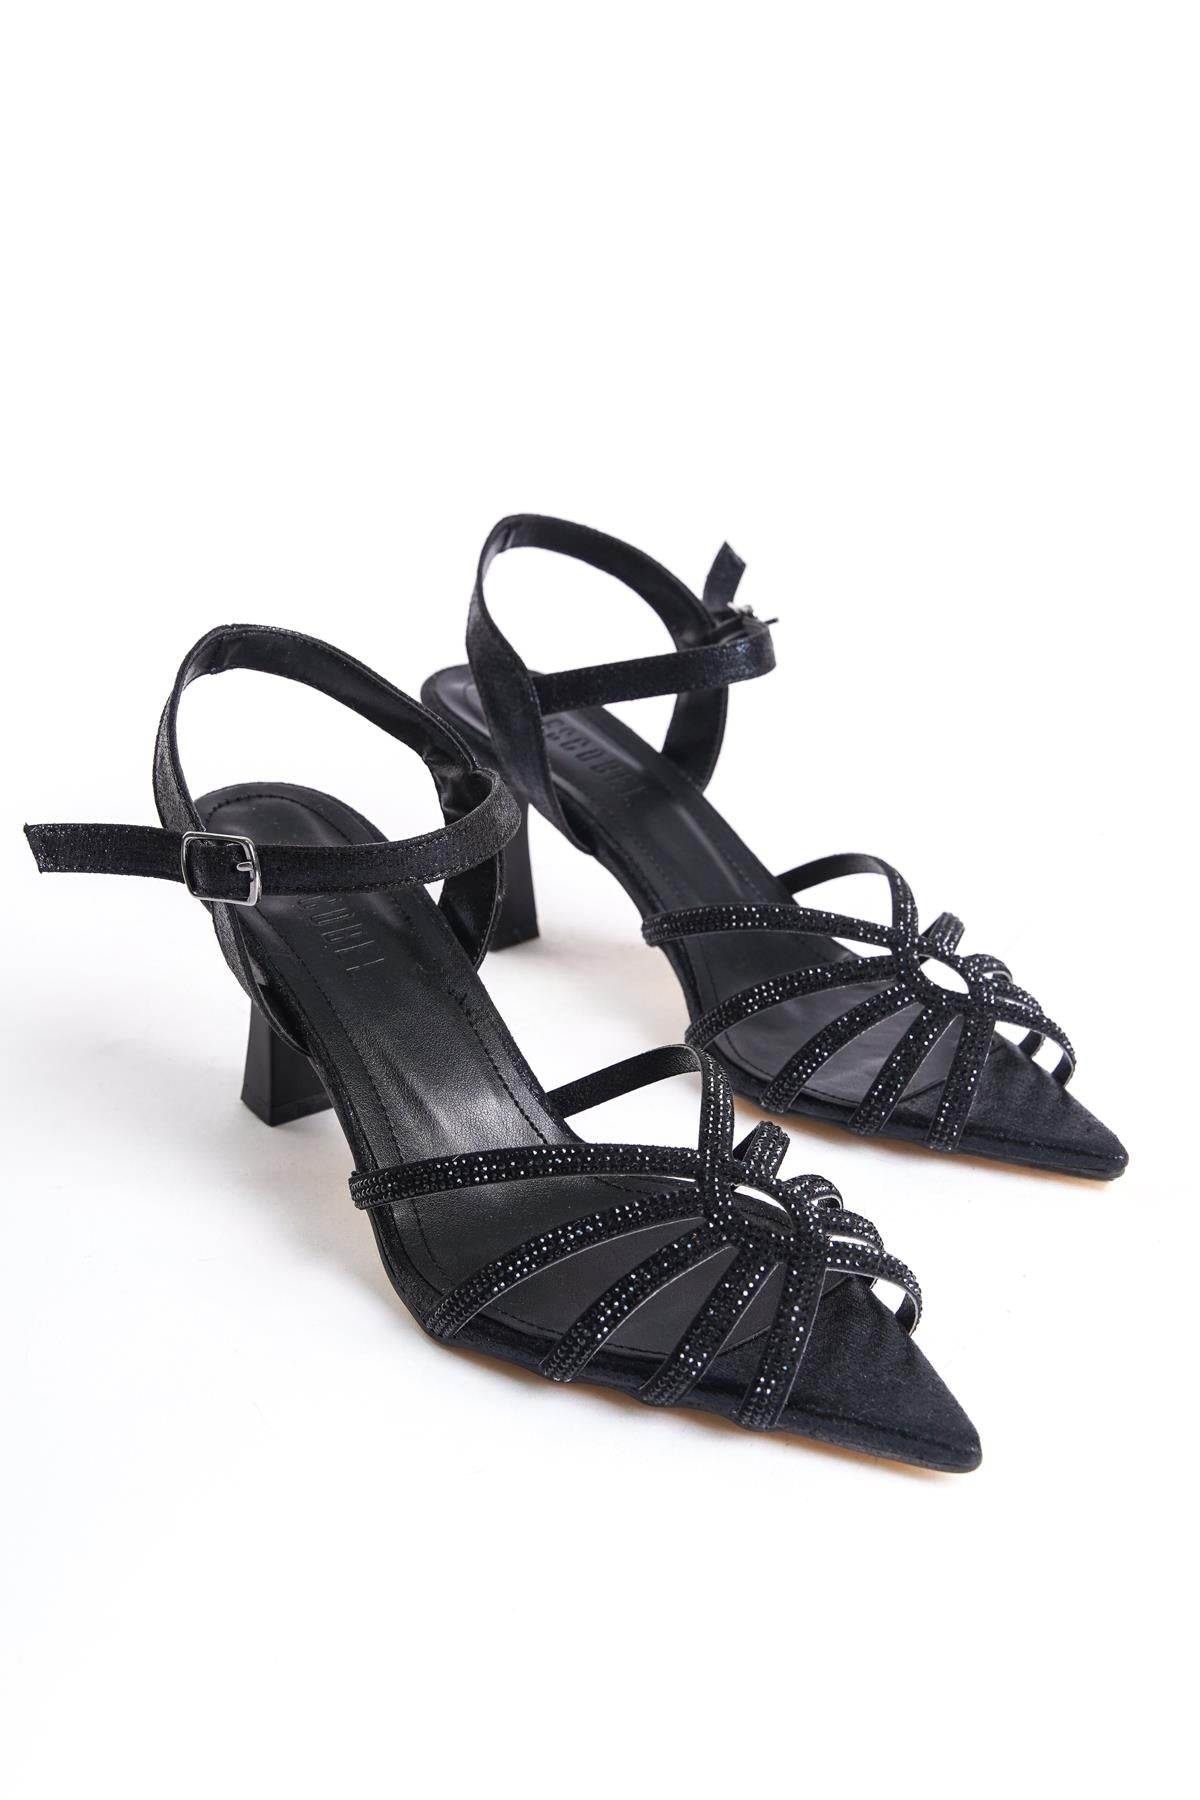 Women's Black Thin Heel Pointed Toe Evening Dress Shoes 8 Cm Heel - STREETMODE™